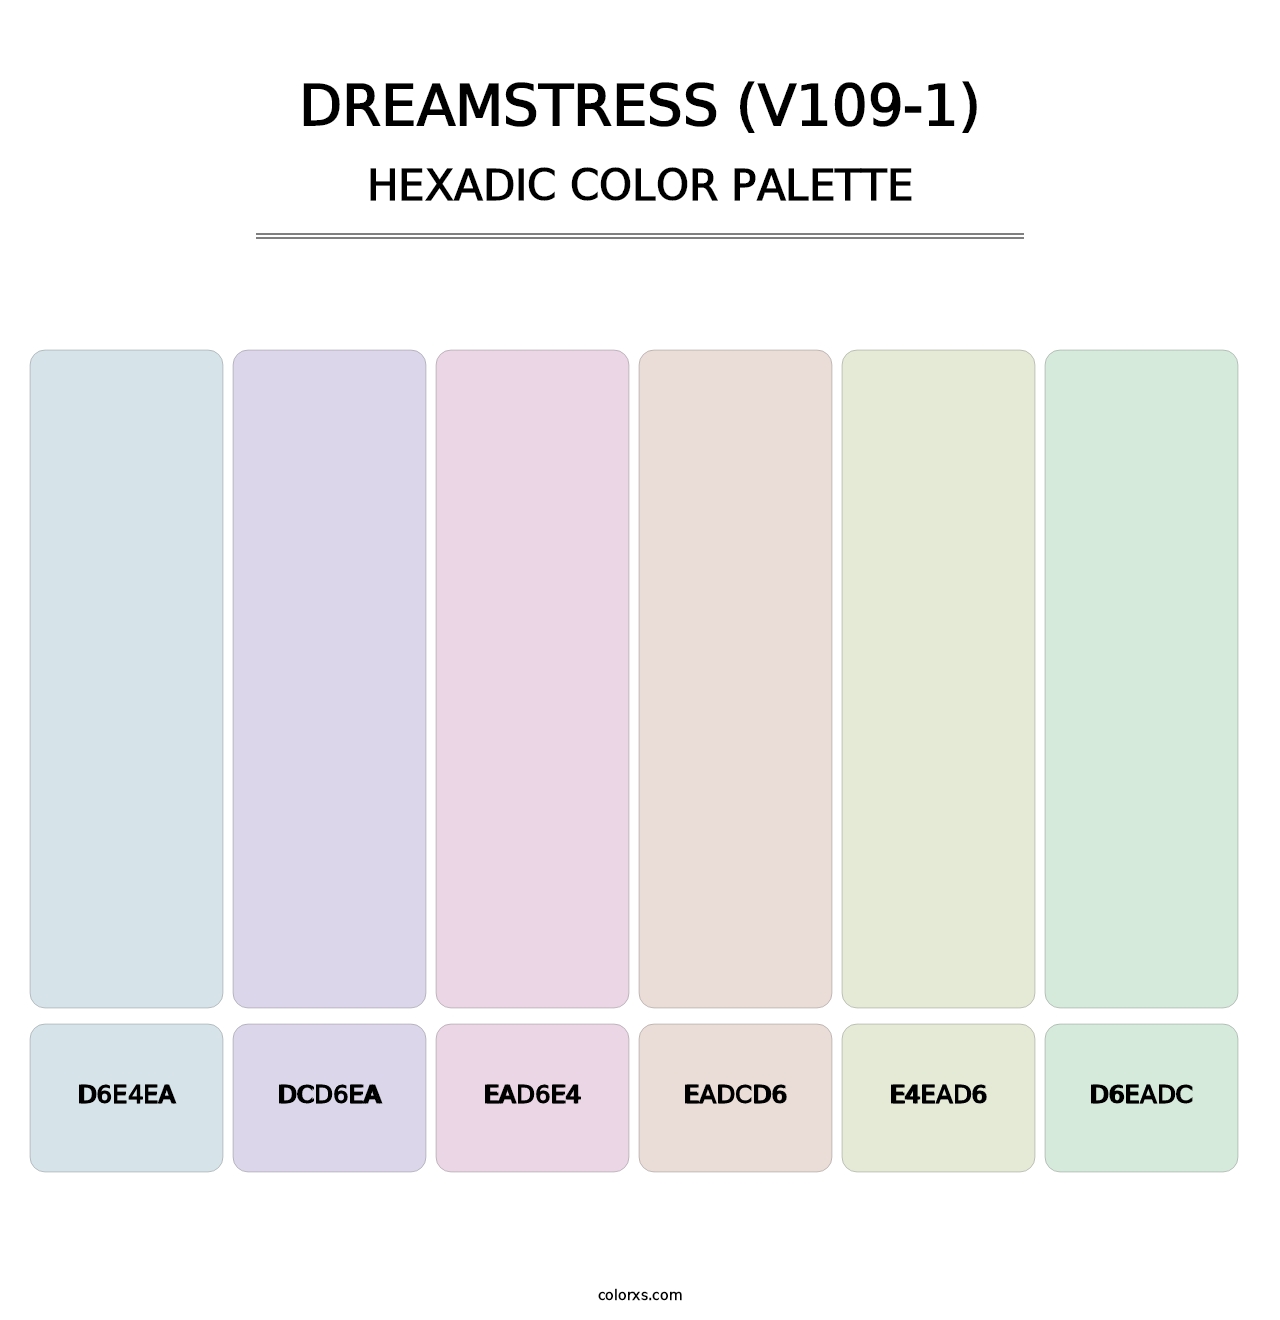 Dreamstress (V109-1) - Hexadic Color Palette